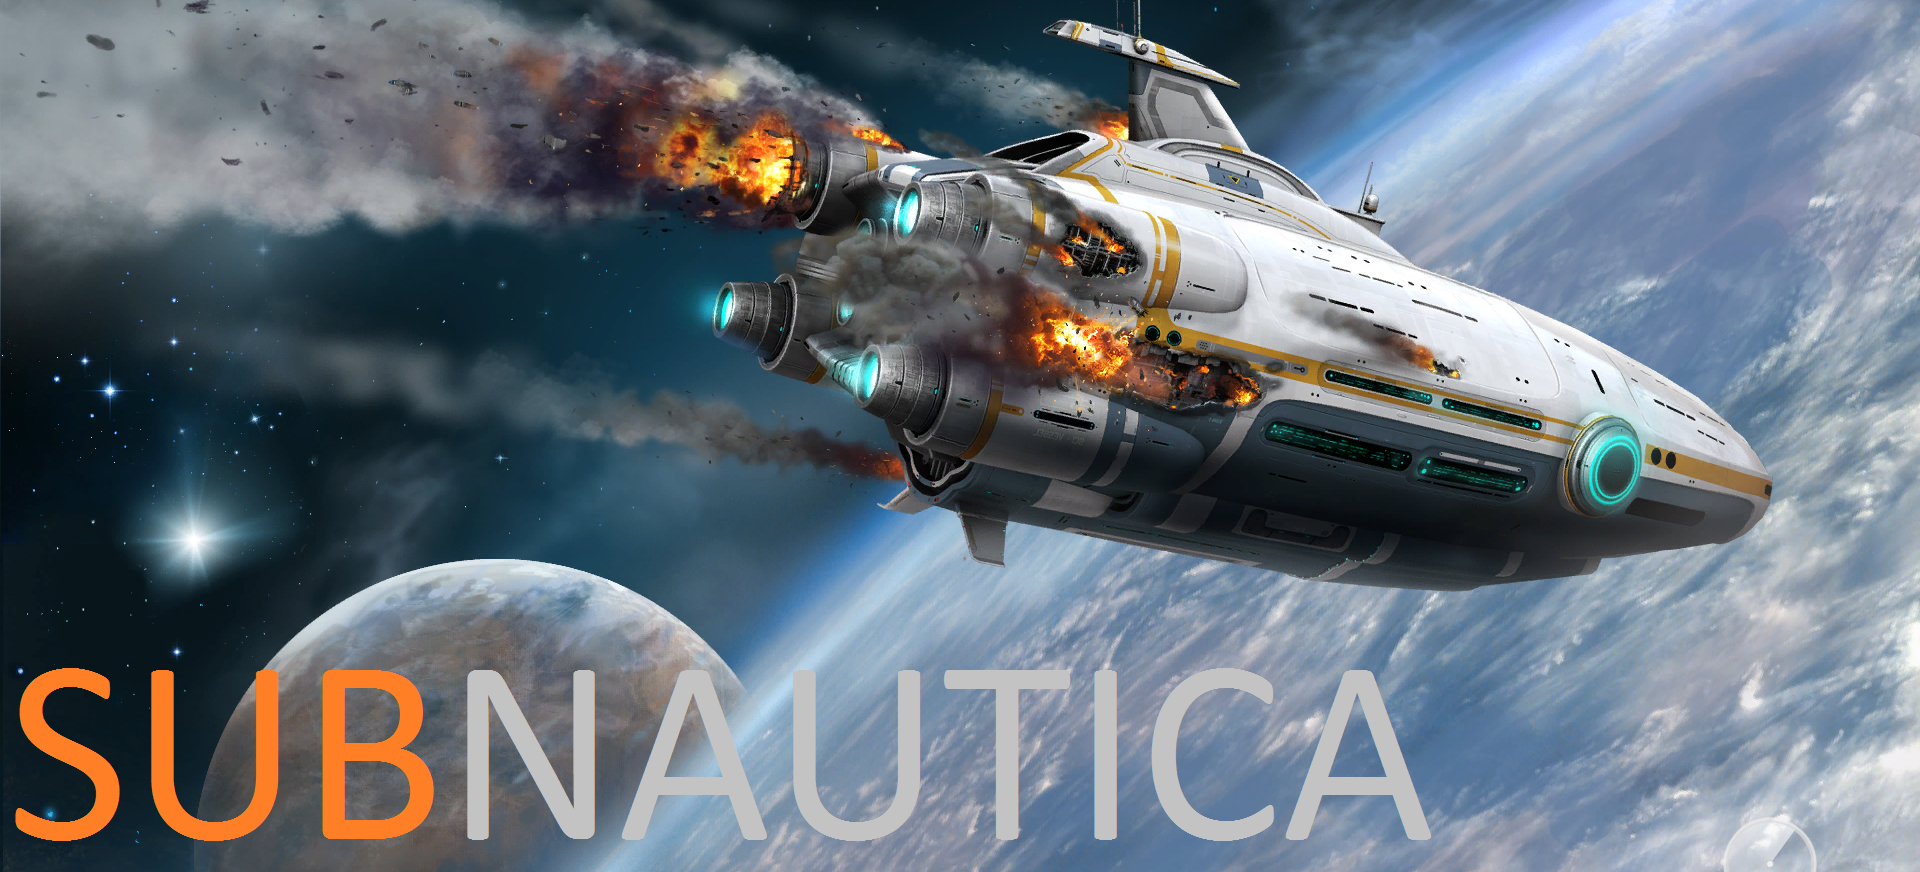 Subnautica is a deep sea adventure game